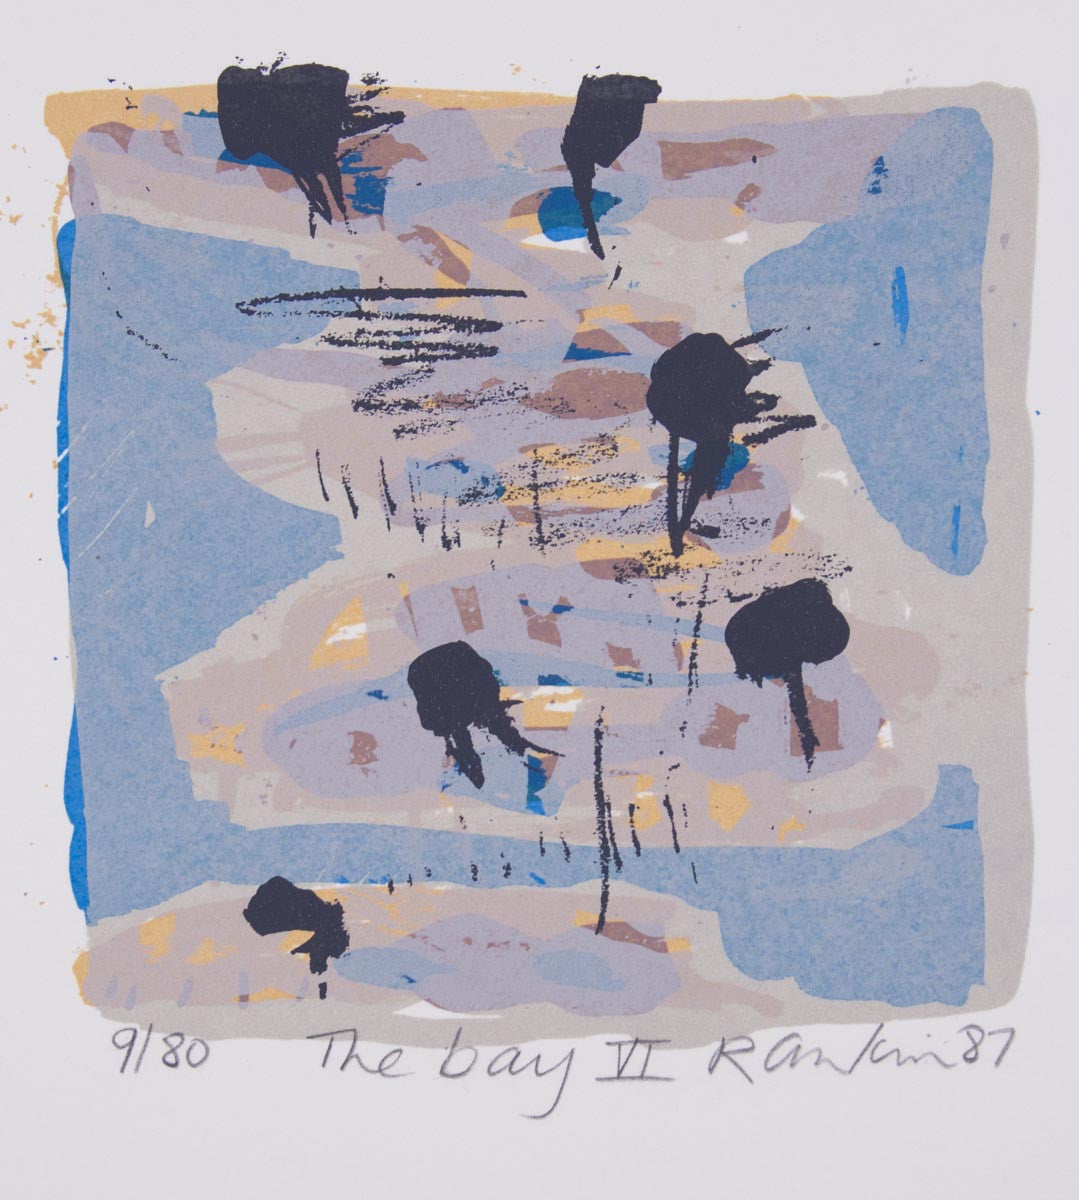 David Rankin 'The Bay VI' - screenprint on paper